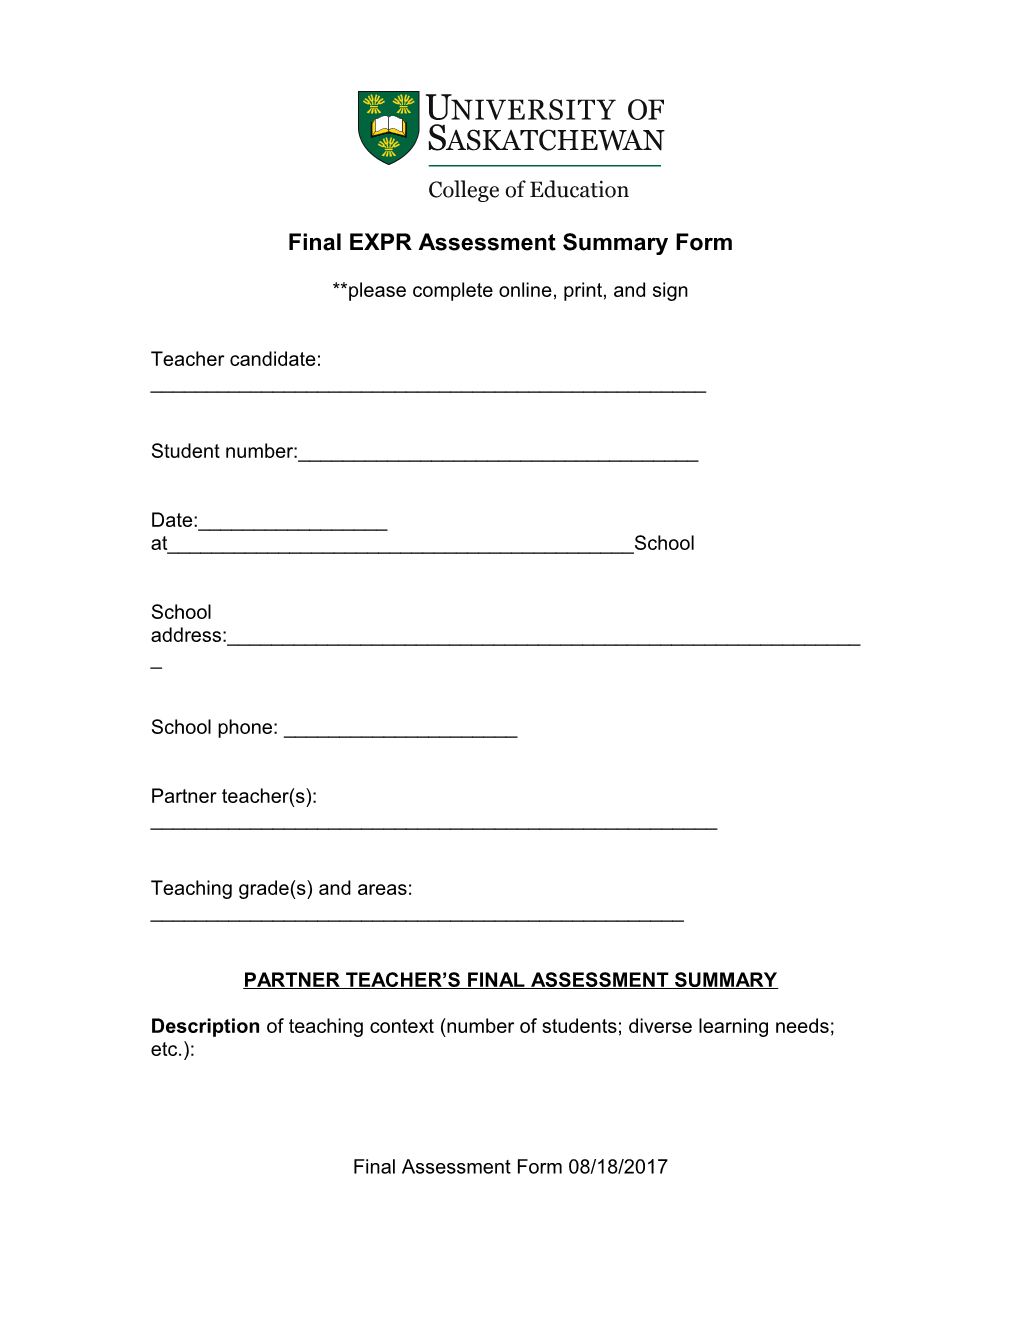 Finalexprassessment Summary Form